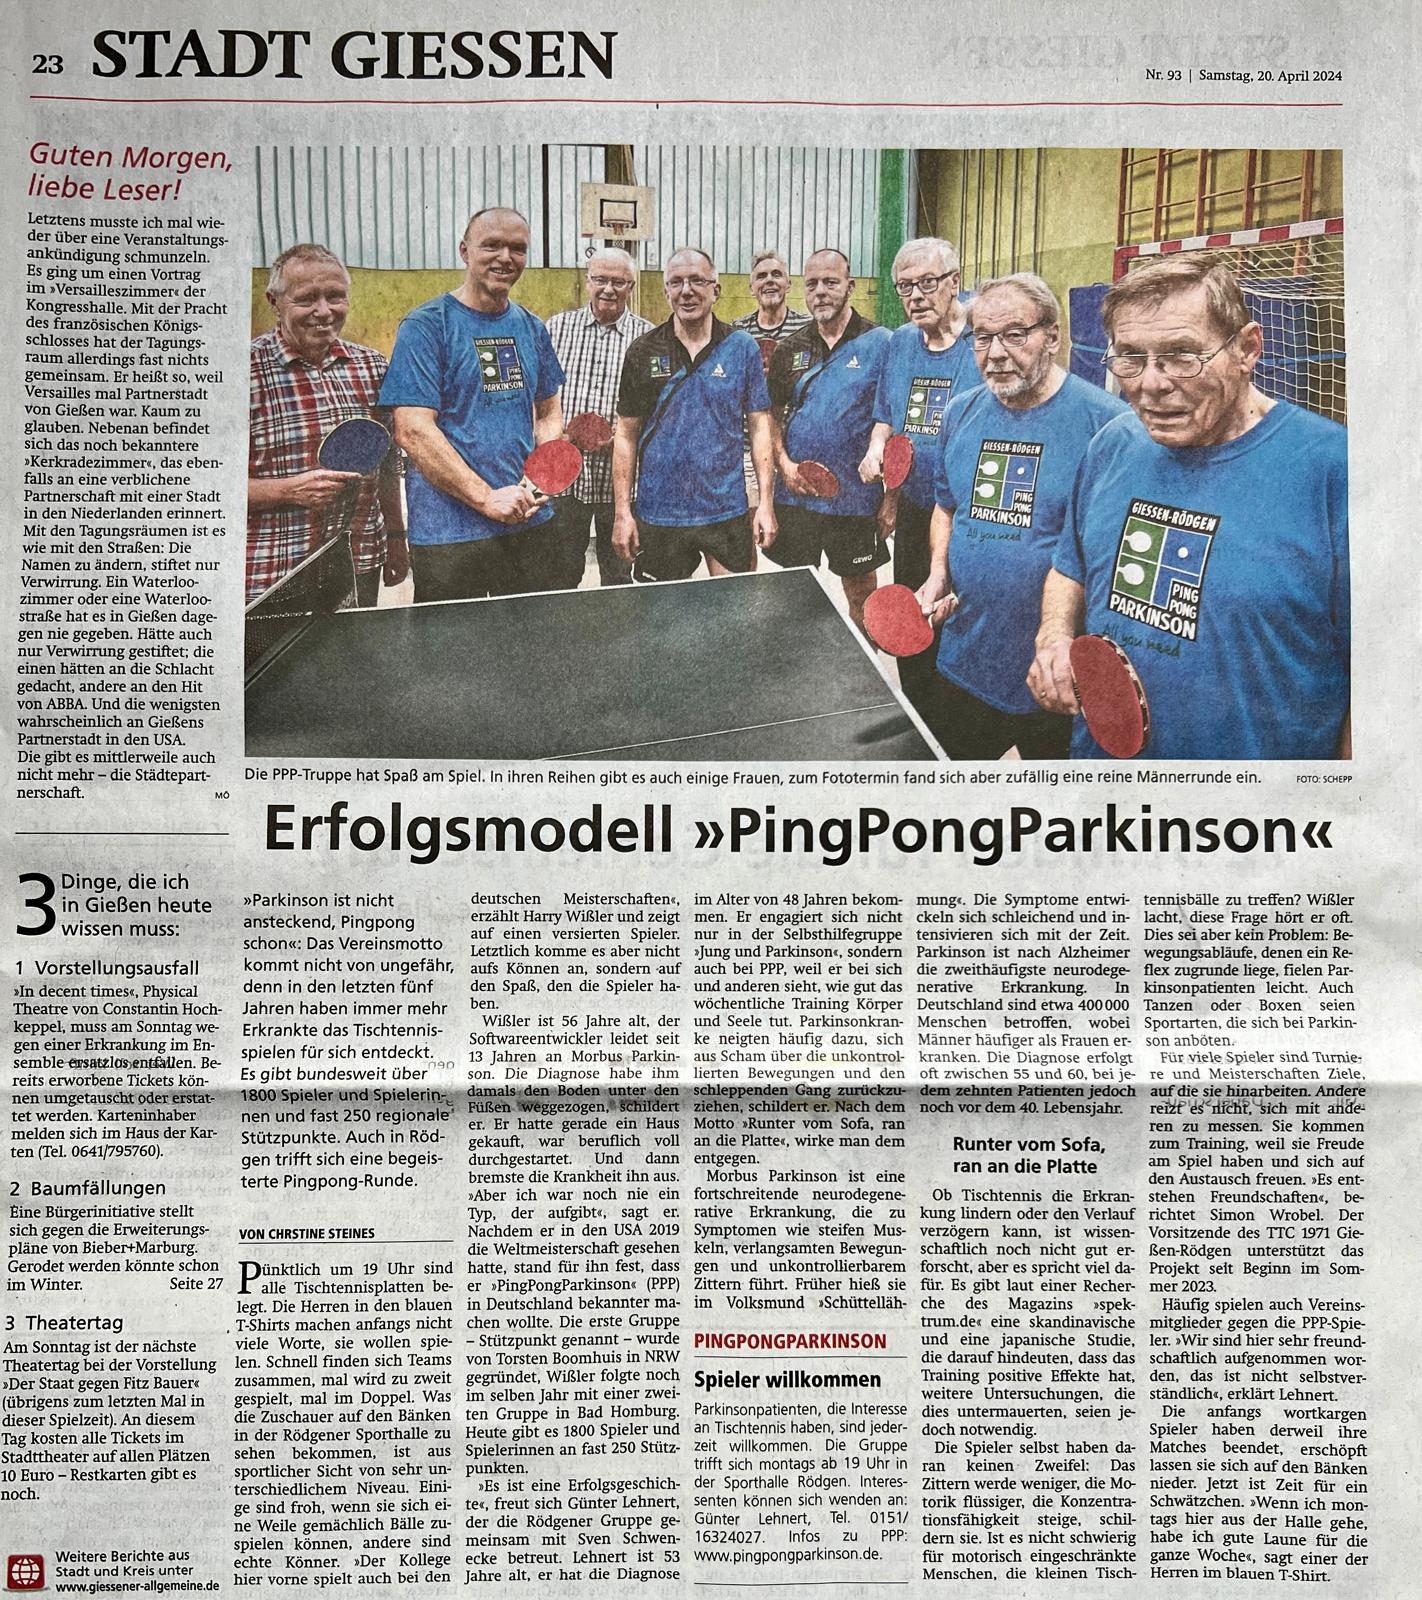 Erfolgsmodell “PingPongParkinson”